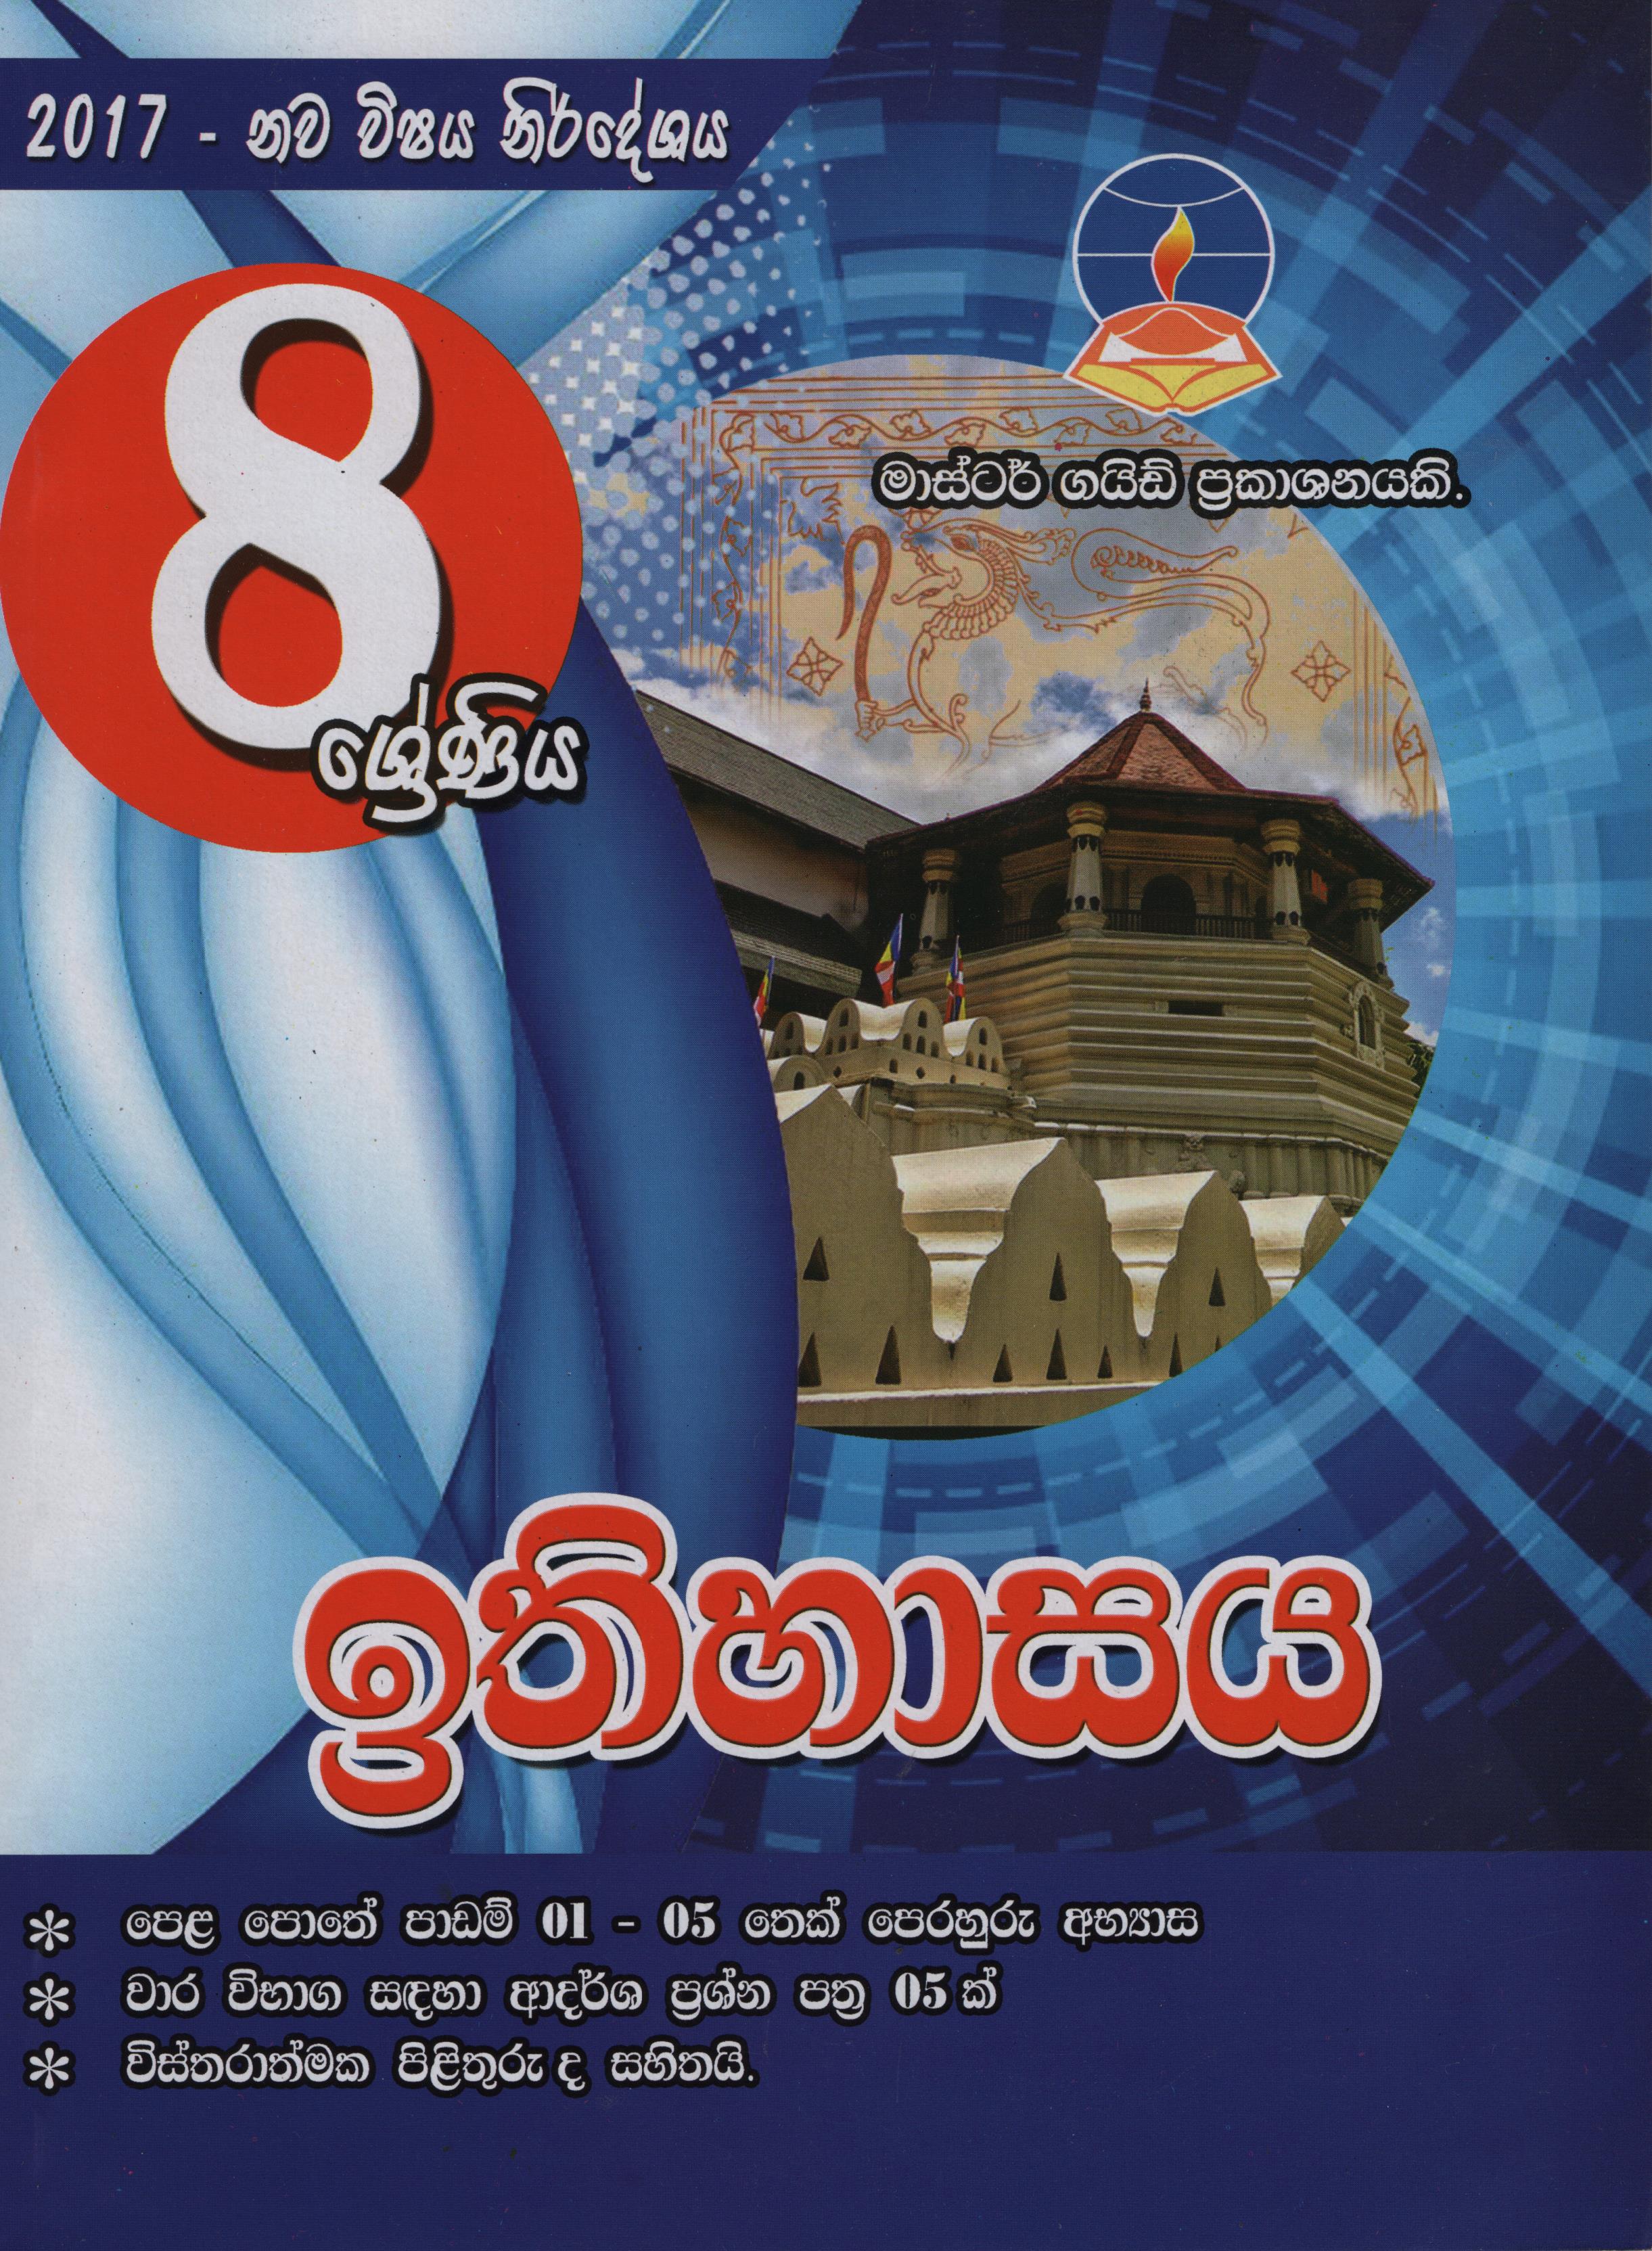 Master Guide 8 Shreniya Ithihasaya (2017 Nawa Vishaya Nirdeshay)